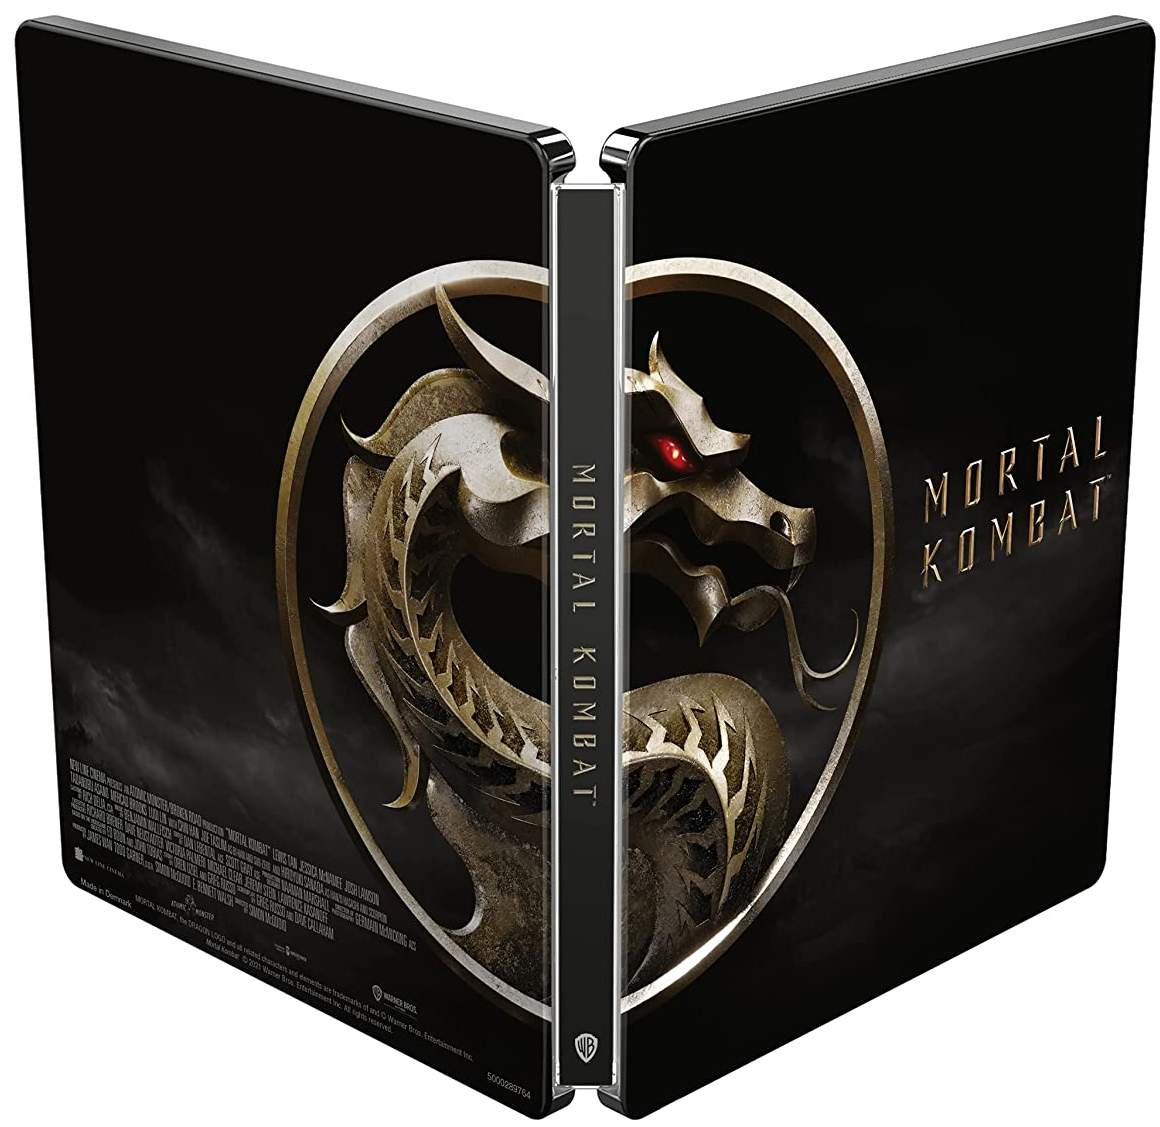 Mortal Kombat - Blu-ray Steelbook (bez CZ)